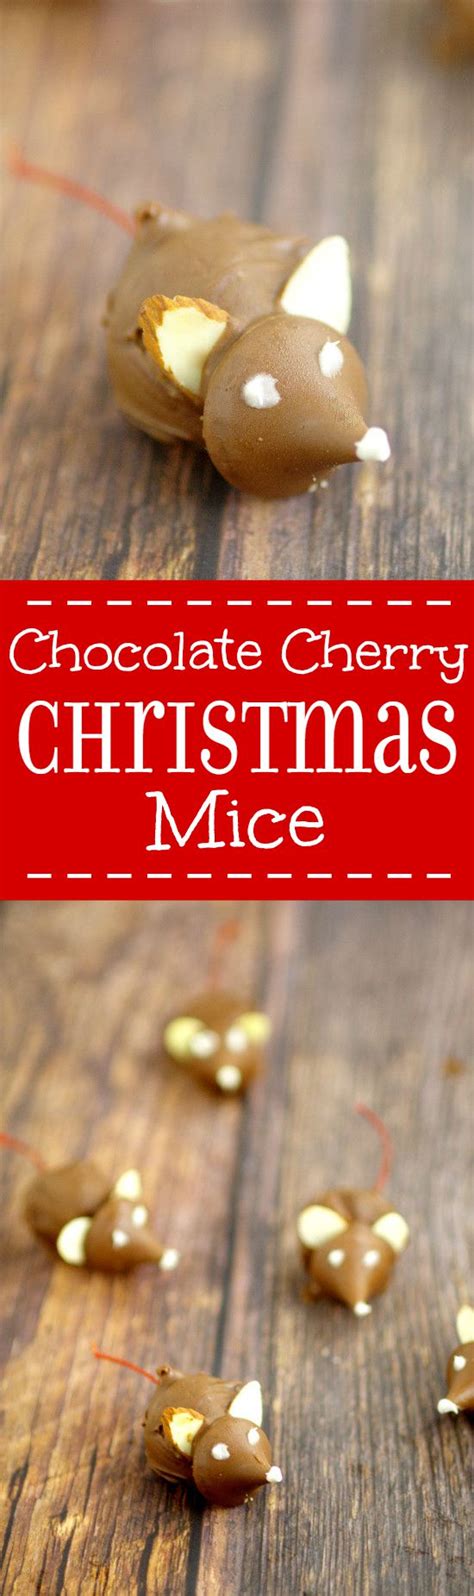 chocolate-cherry-christmas-mice-the-gracious-wife image